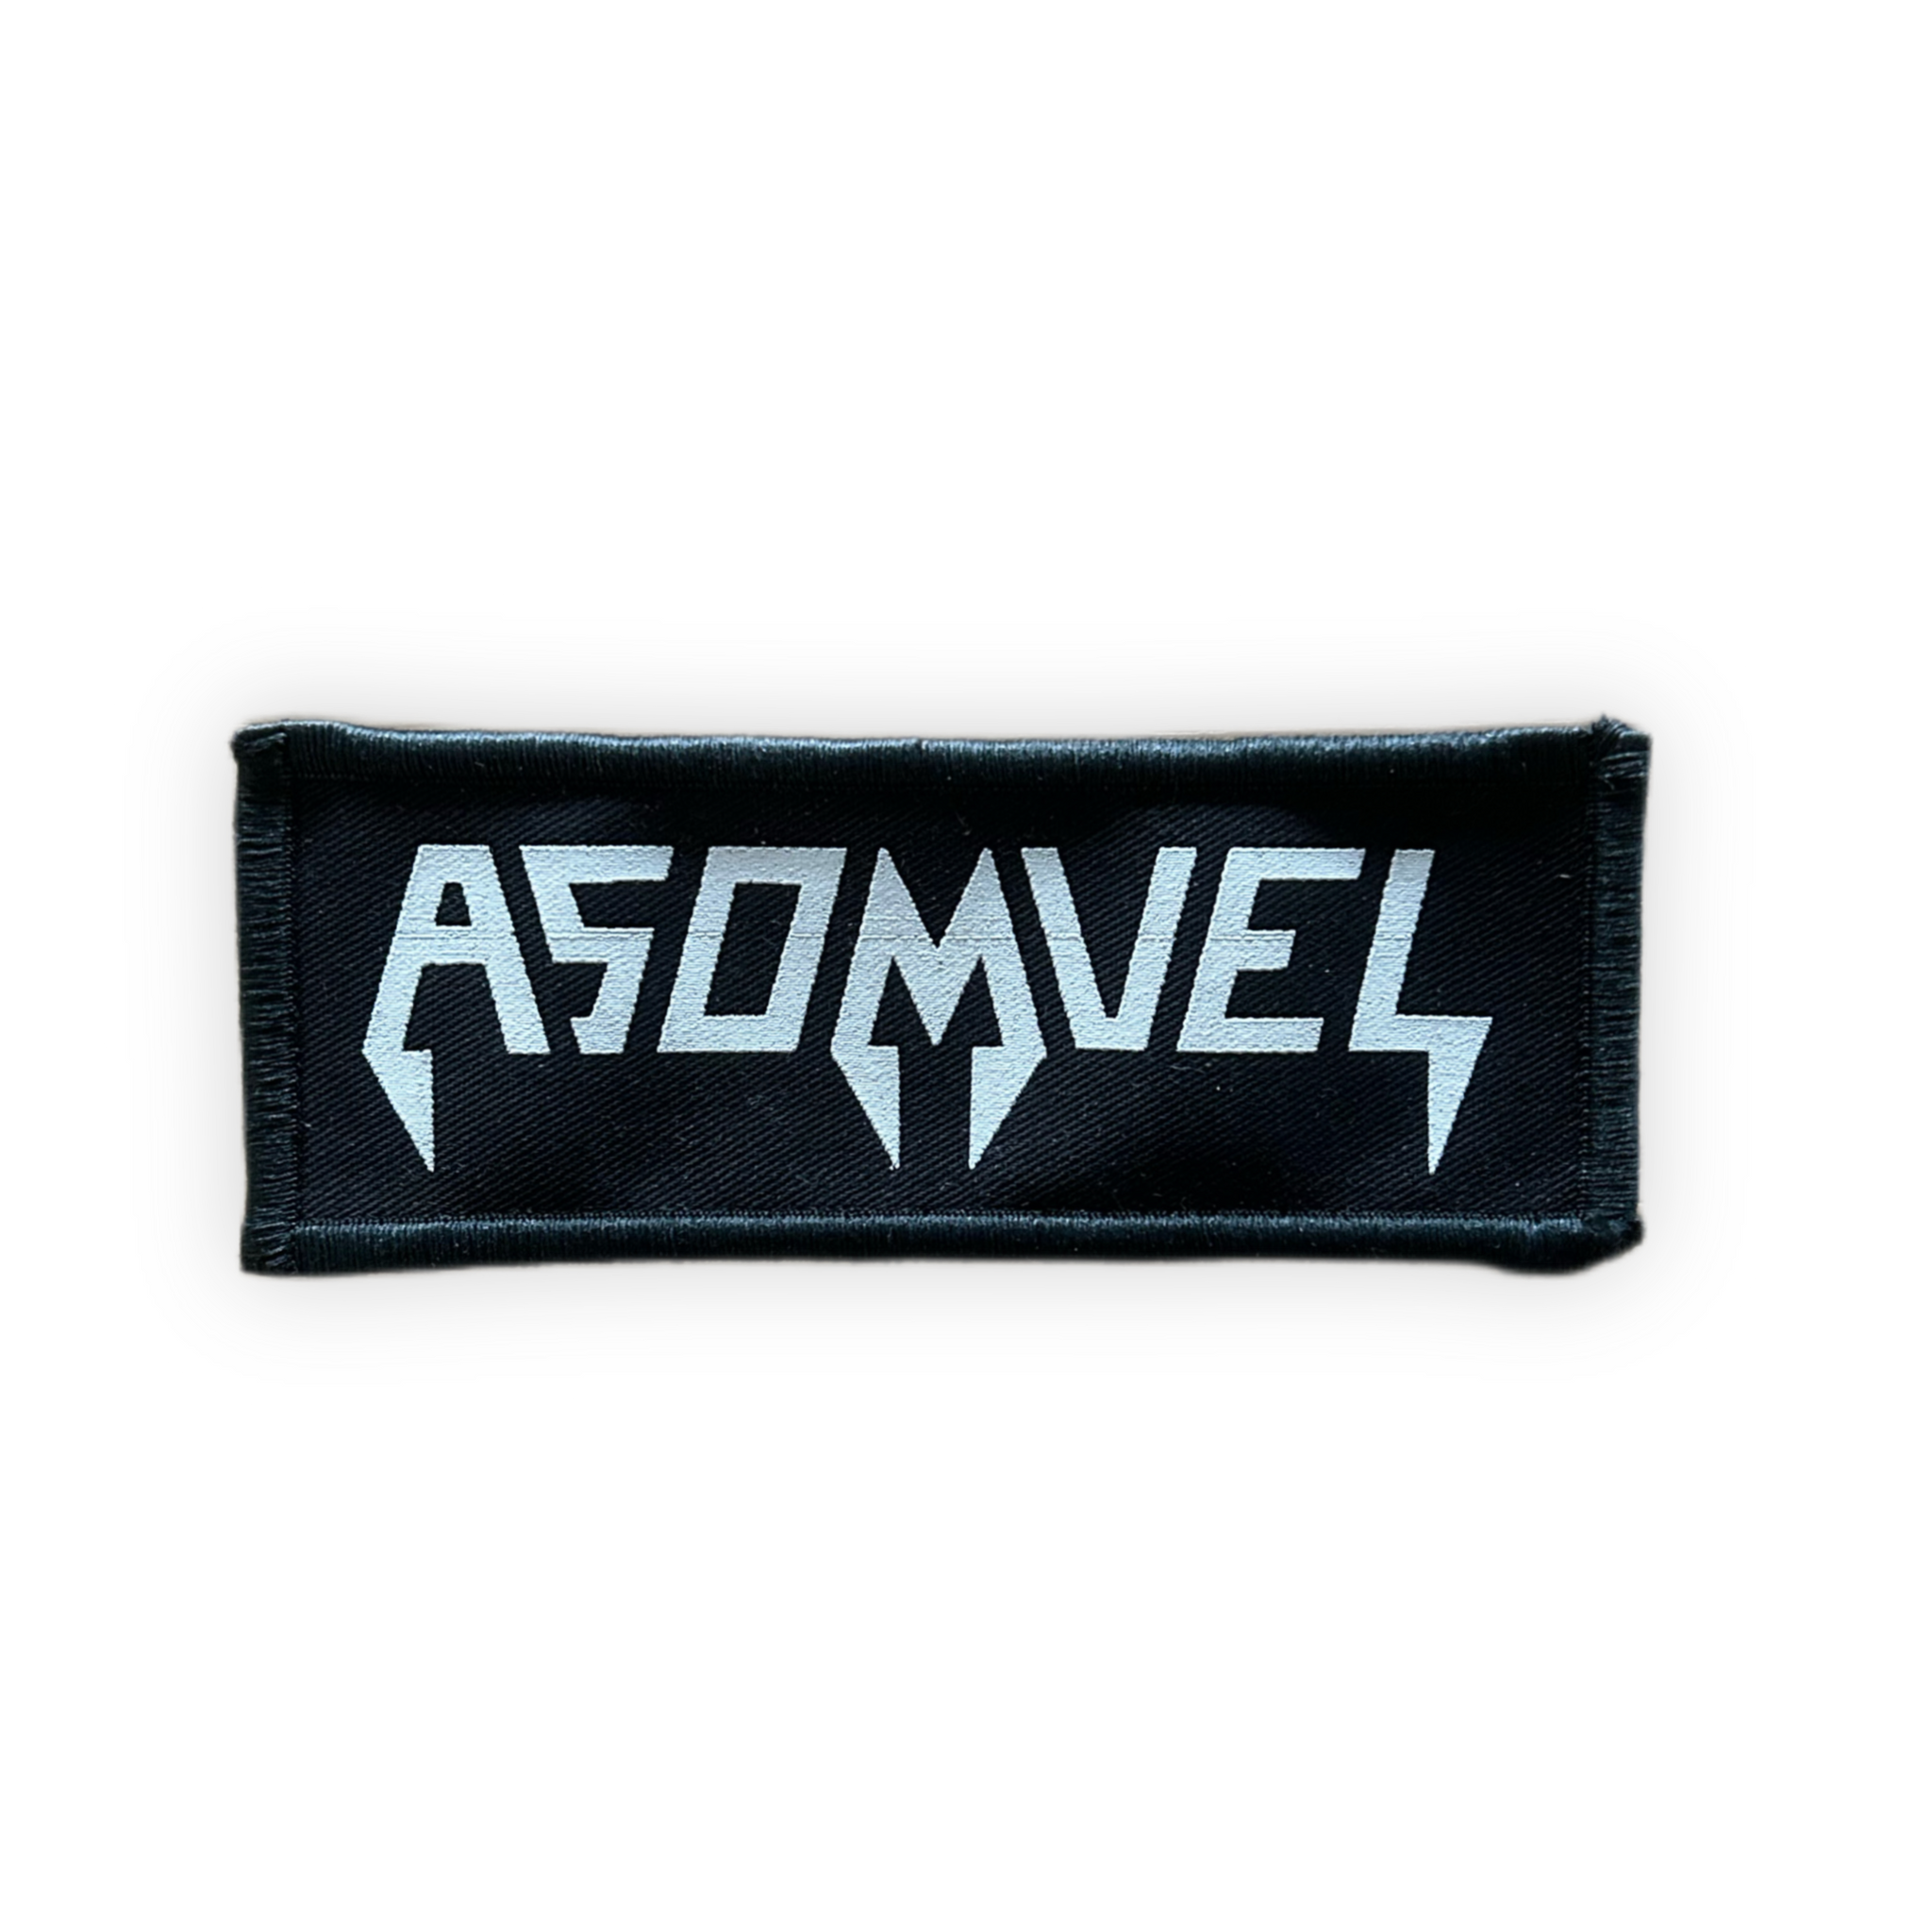 ASOMVEL - Small Rectangular Logo Patch